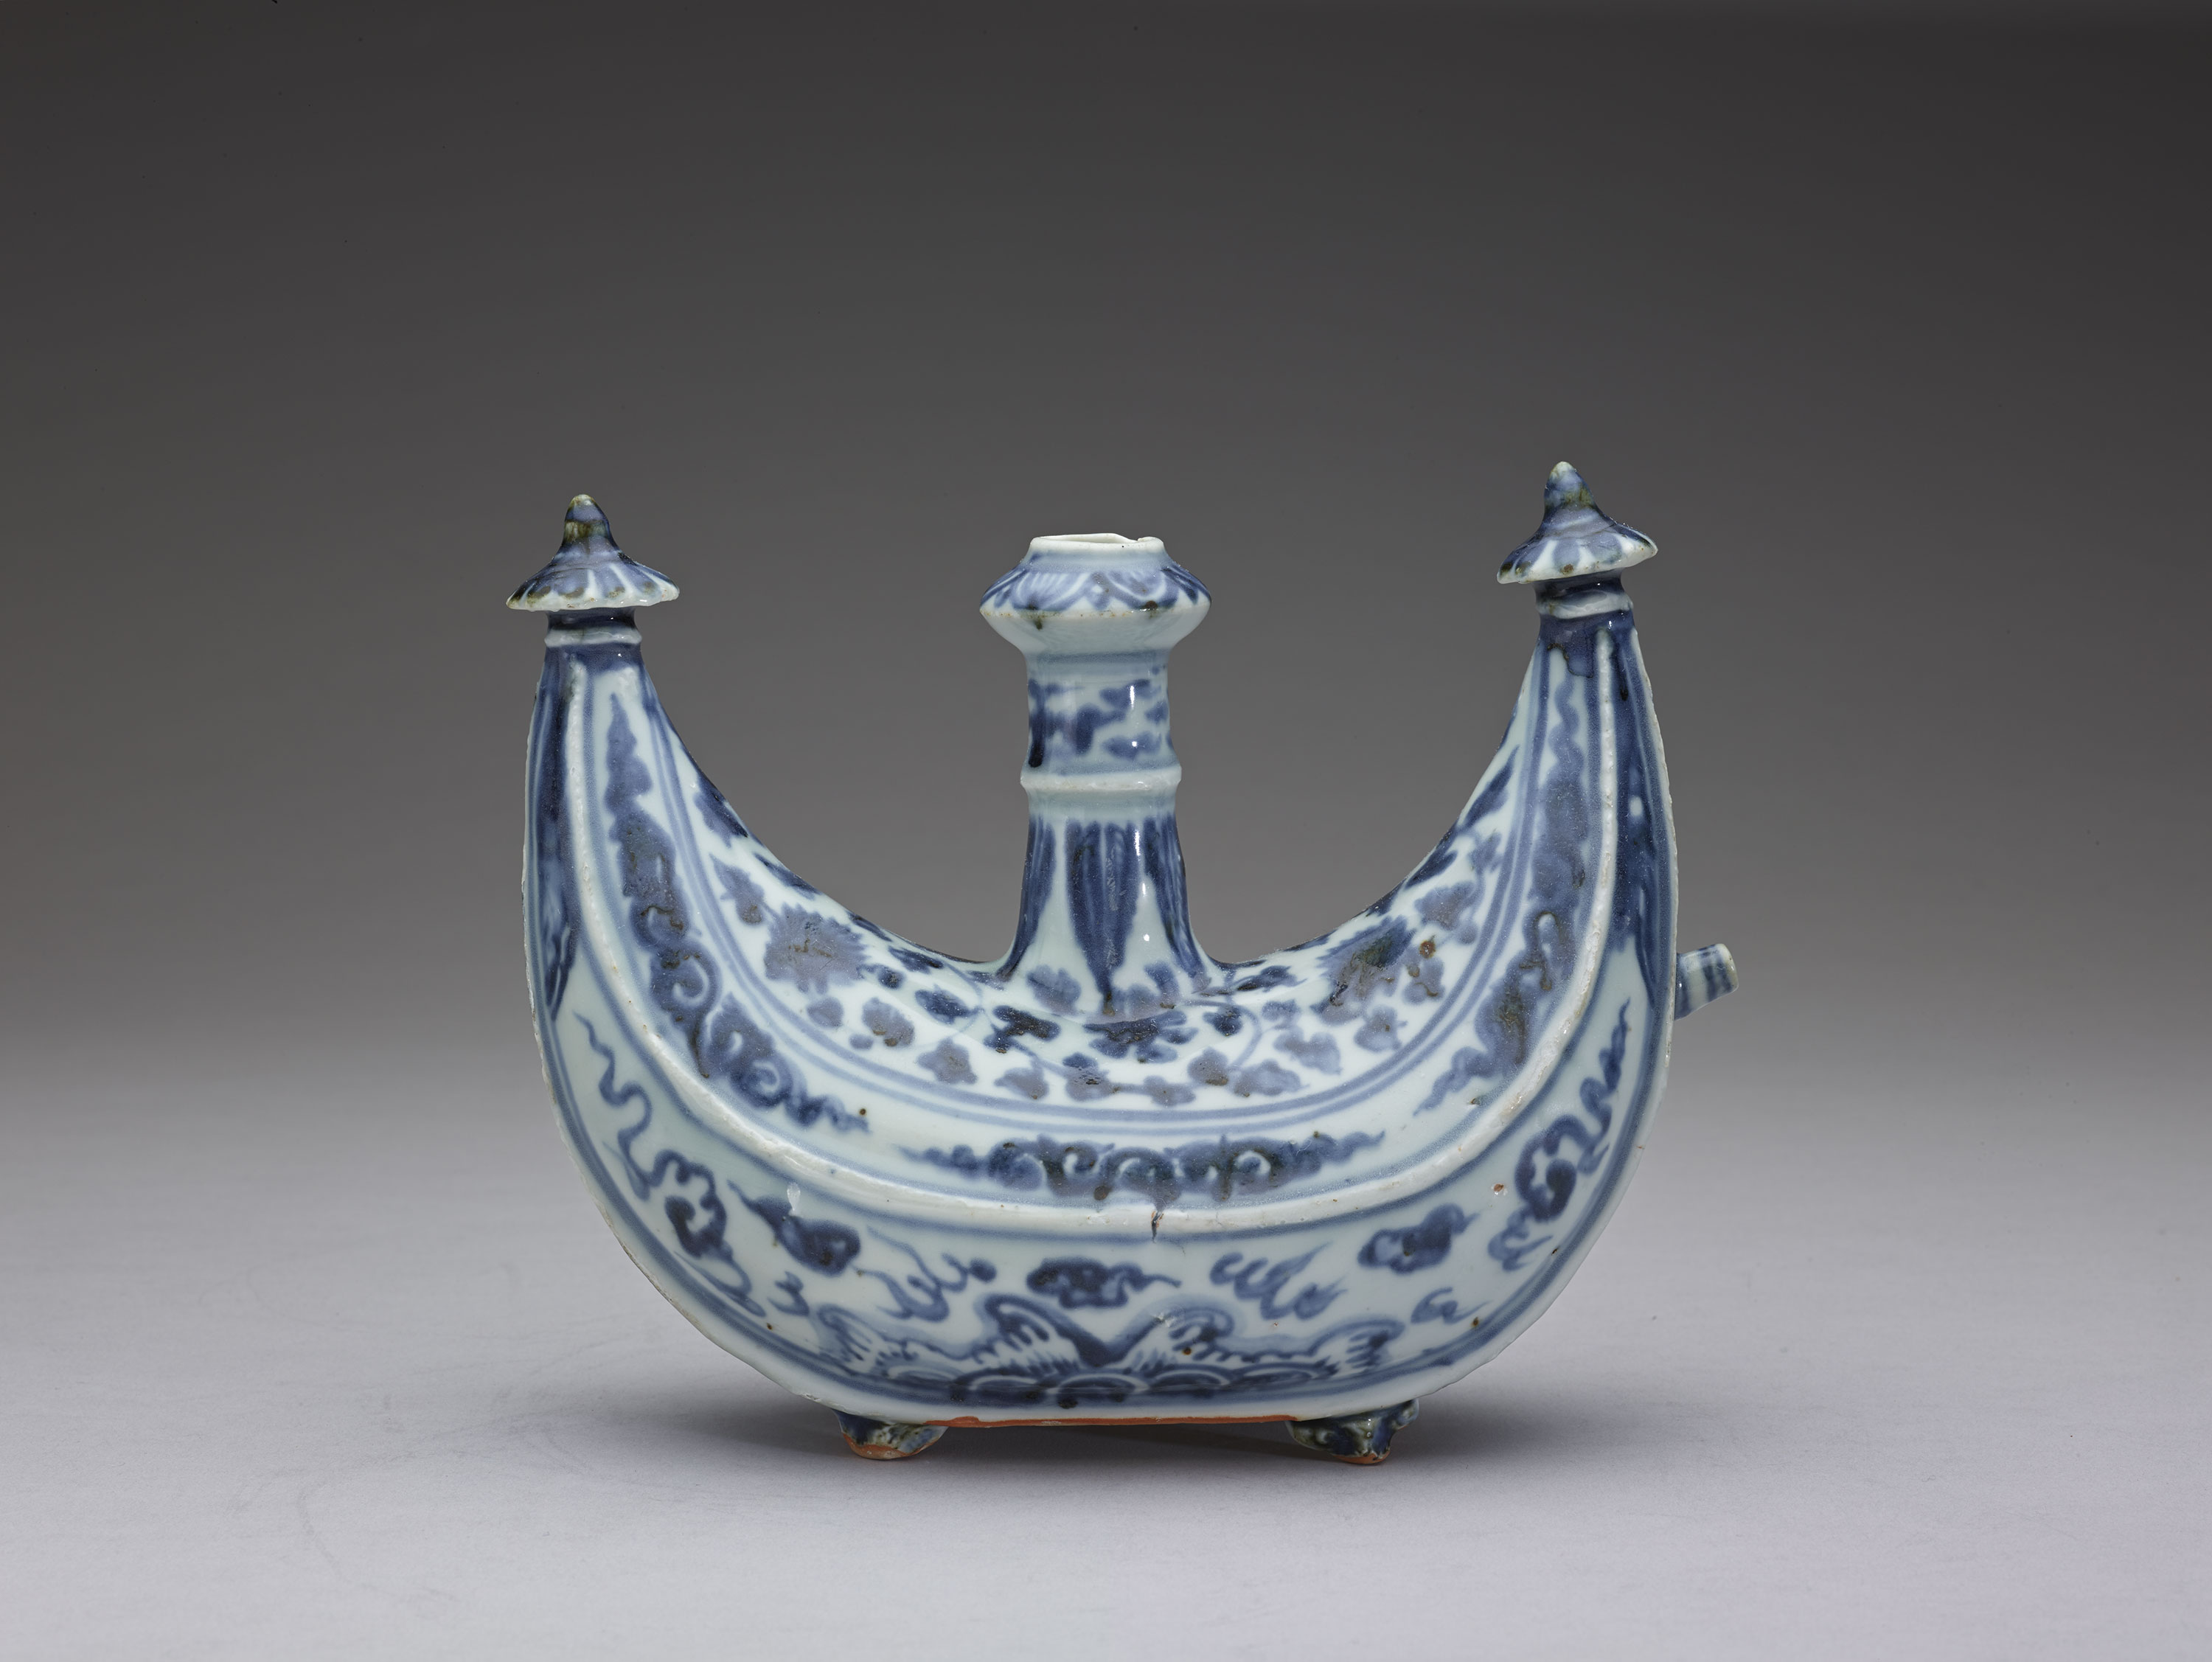 Junchi water vessel with a crescent shape body in underglaze blue